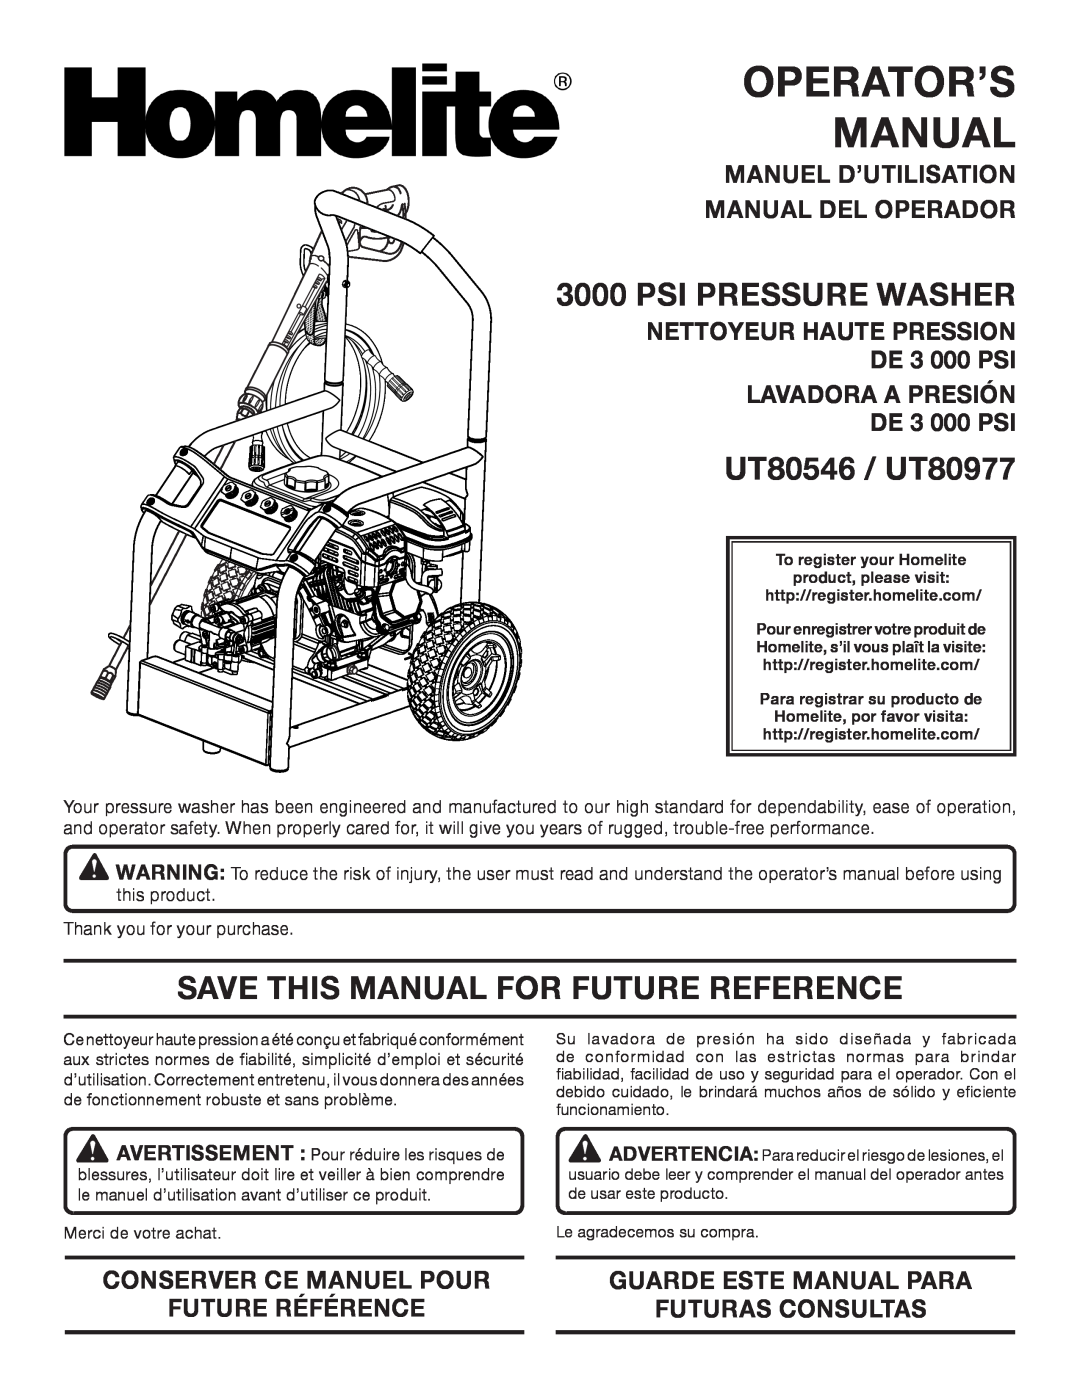 Homelite manuel dutilisation Psi Pressure Washer, UT80546 / UT80977, Save This Manual For Future Reference 